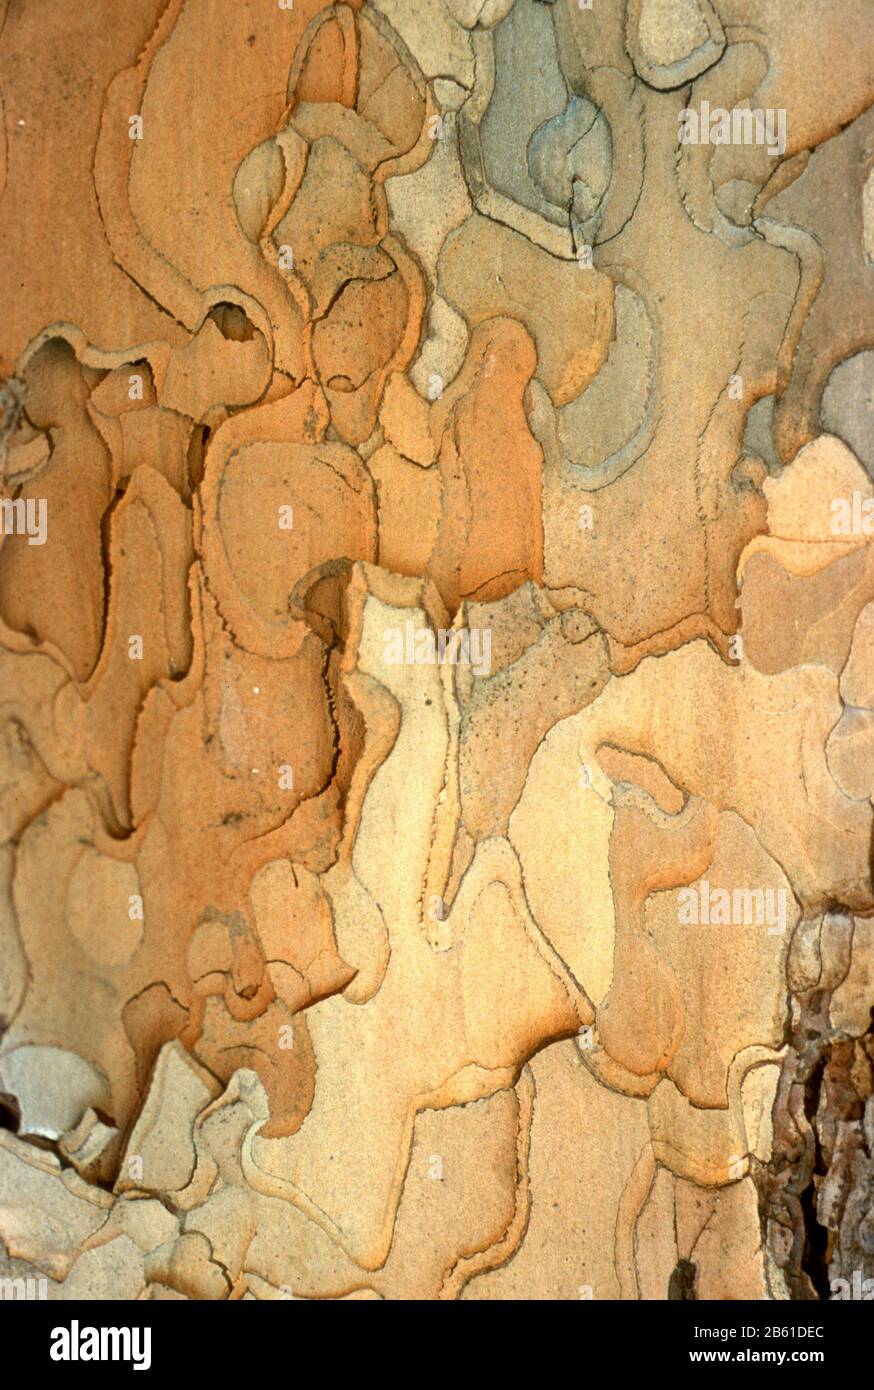 Tree bark in shades of cream, orange and brown - peeling away. Stock Photo